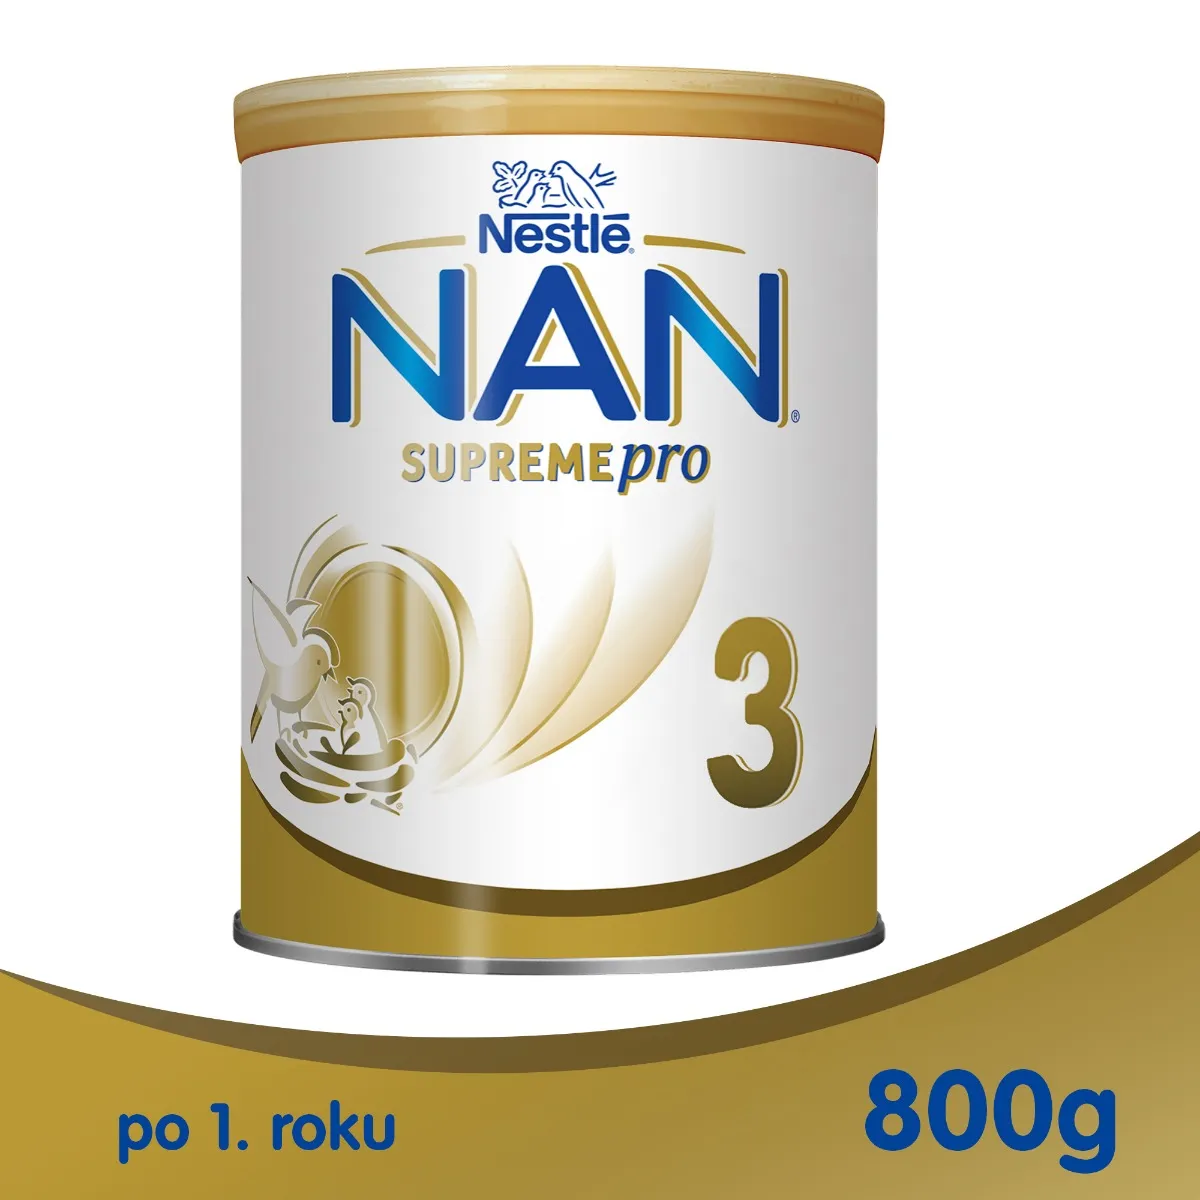 Nestle Nan Supreme Pro 3 HM-O Mleko Modyfikowane Junior Dla dzieci po 1. roku, 800g 